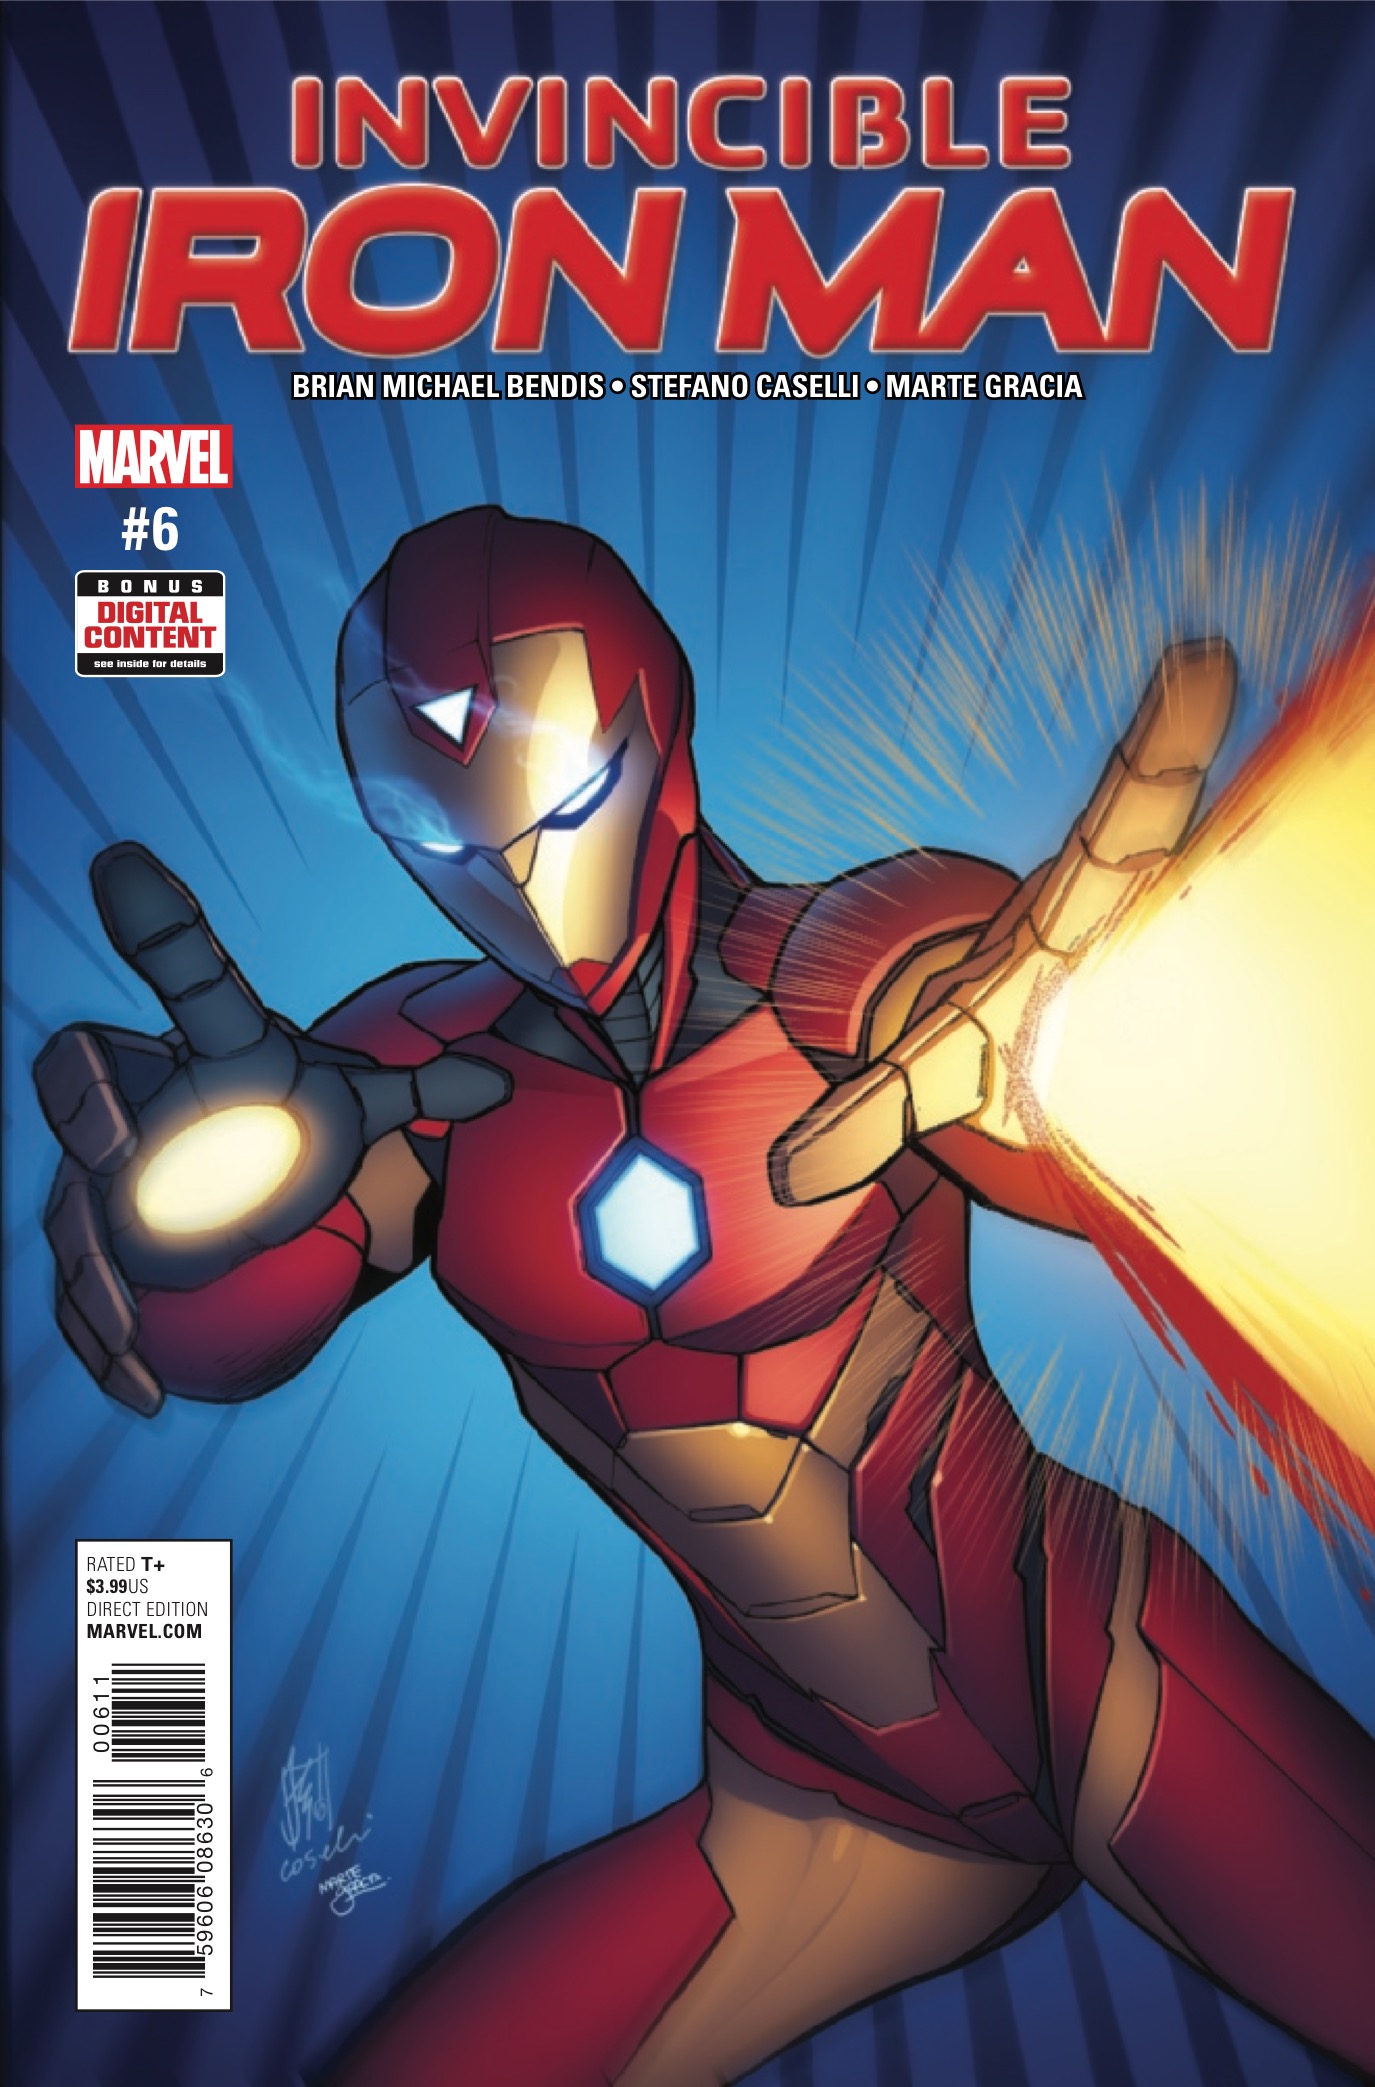 Invincible Iron Man #6 Review